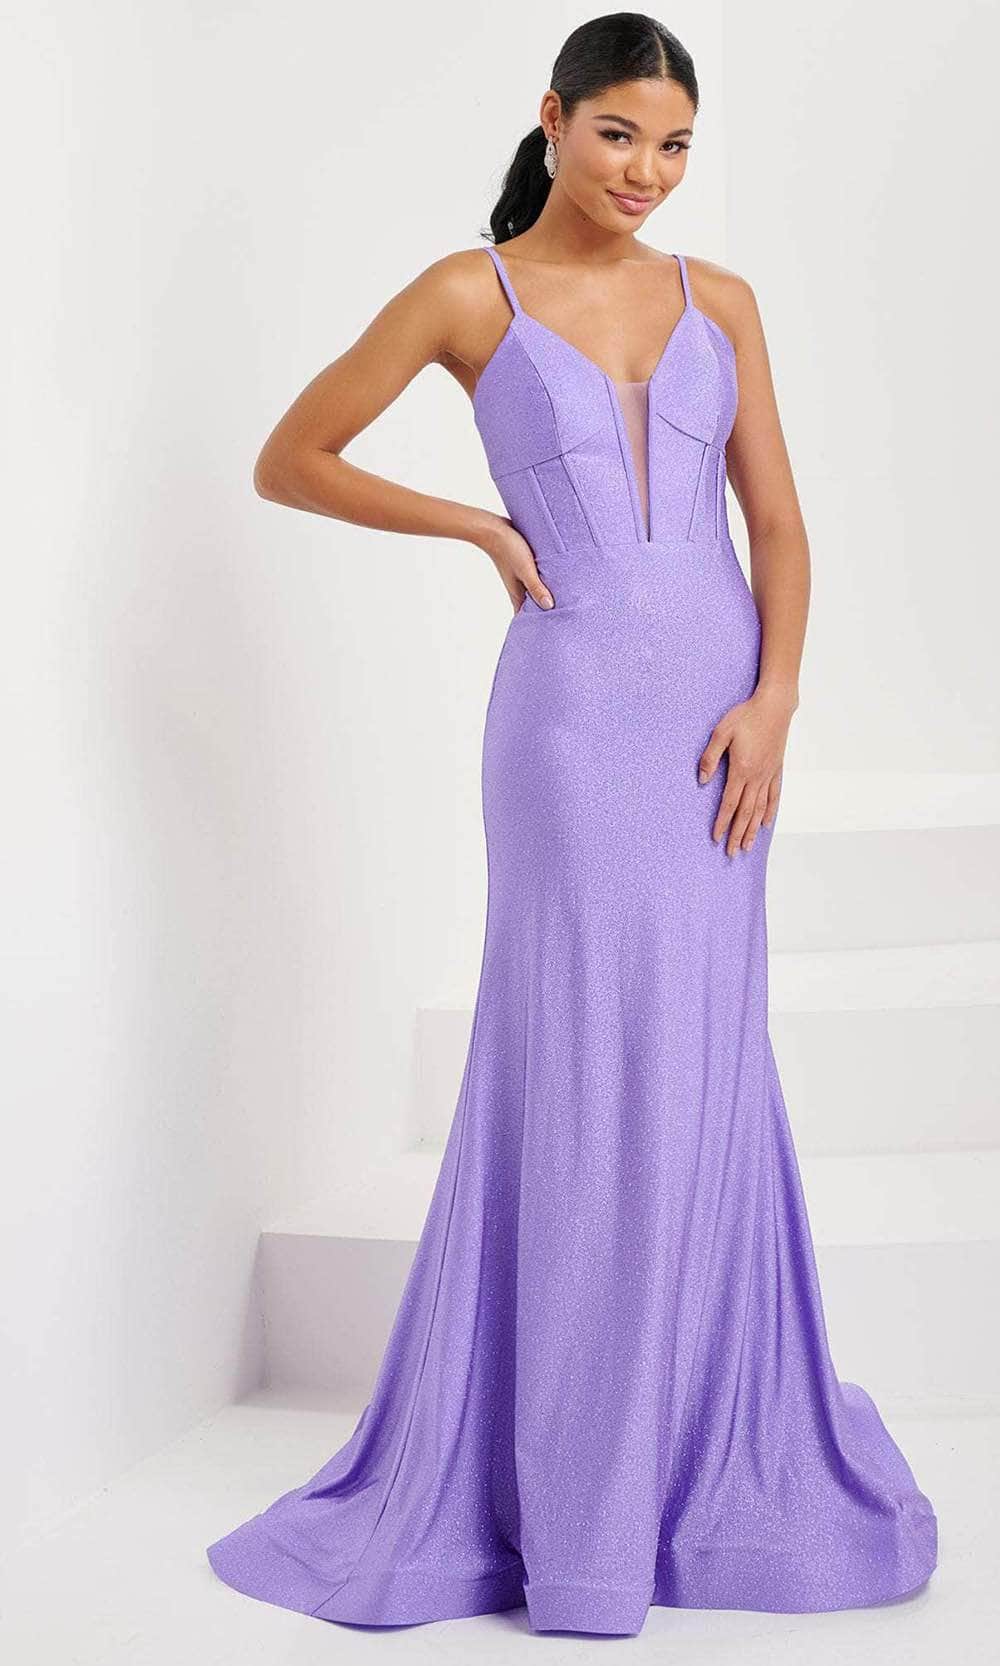 Tiffany Designs 16062 - Glitter Corset Prom Gown Evening Dresses 0 / Deep Lavender